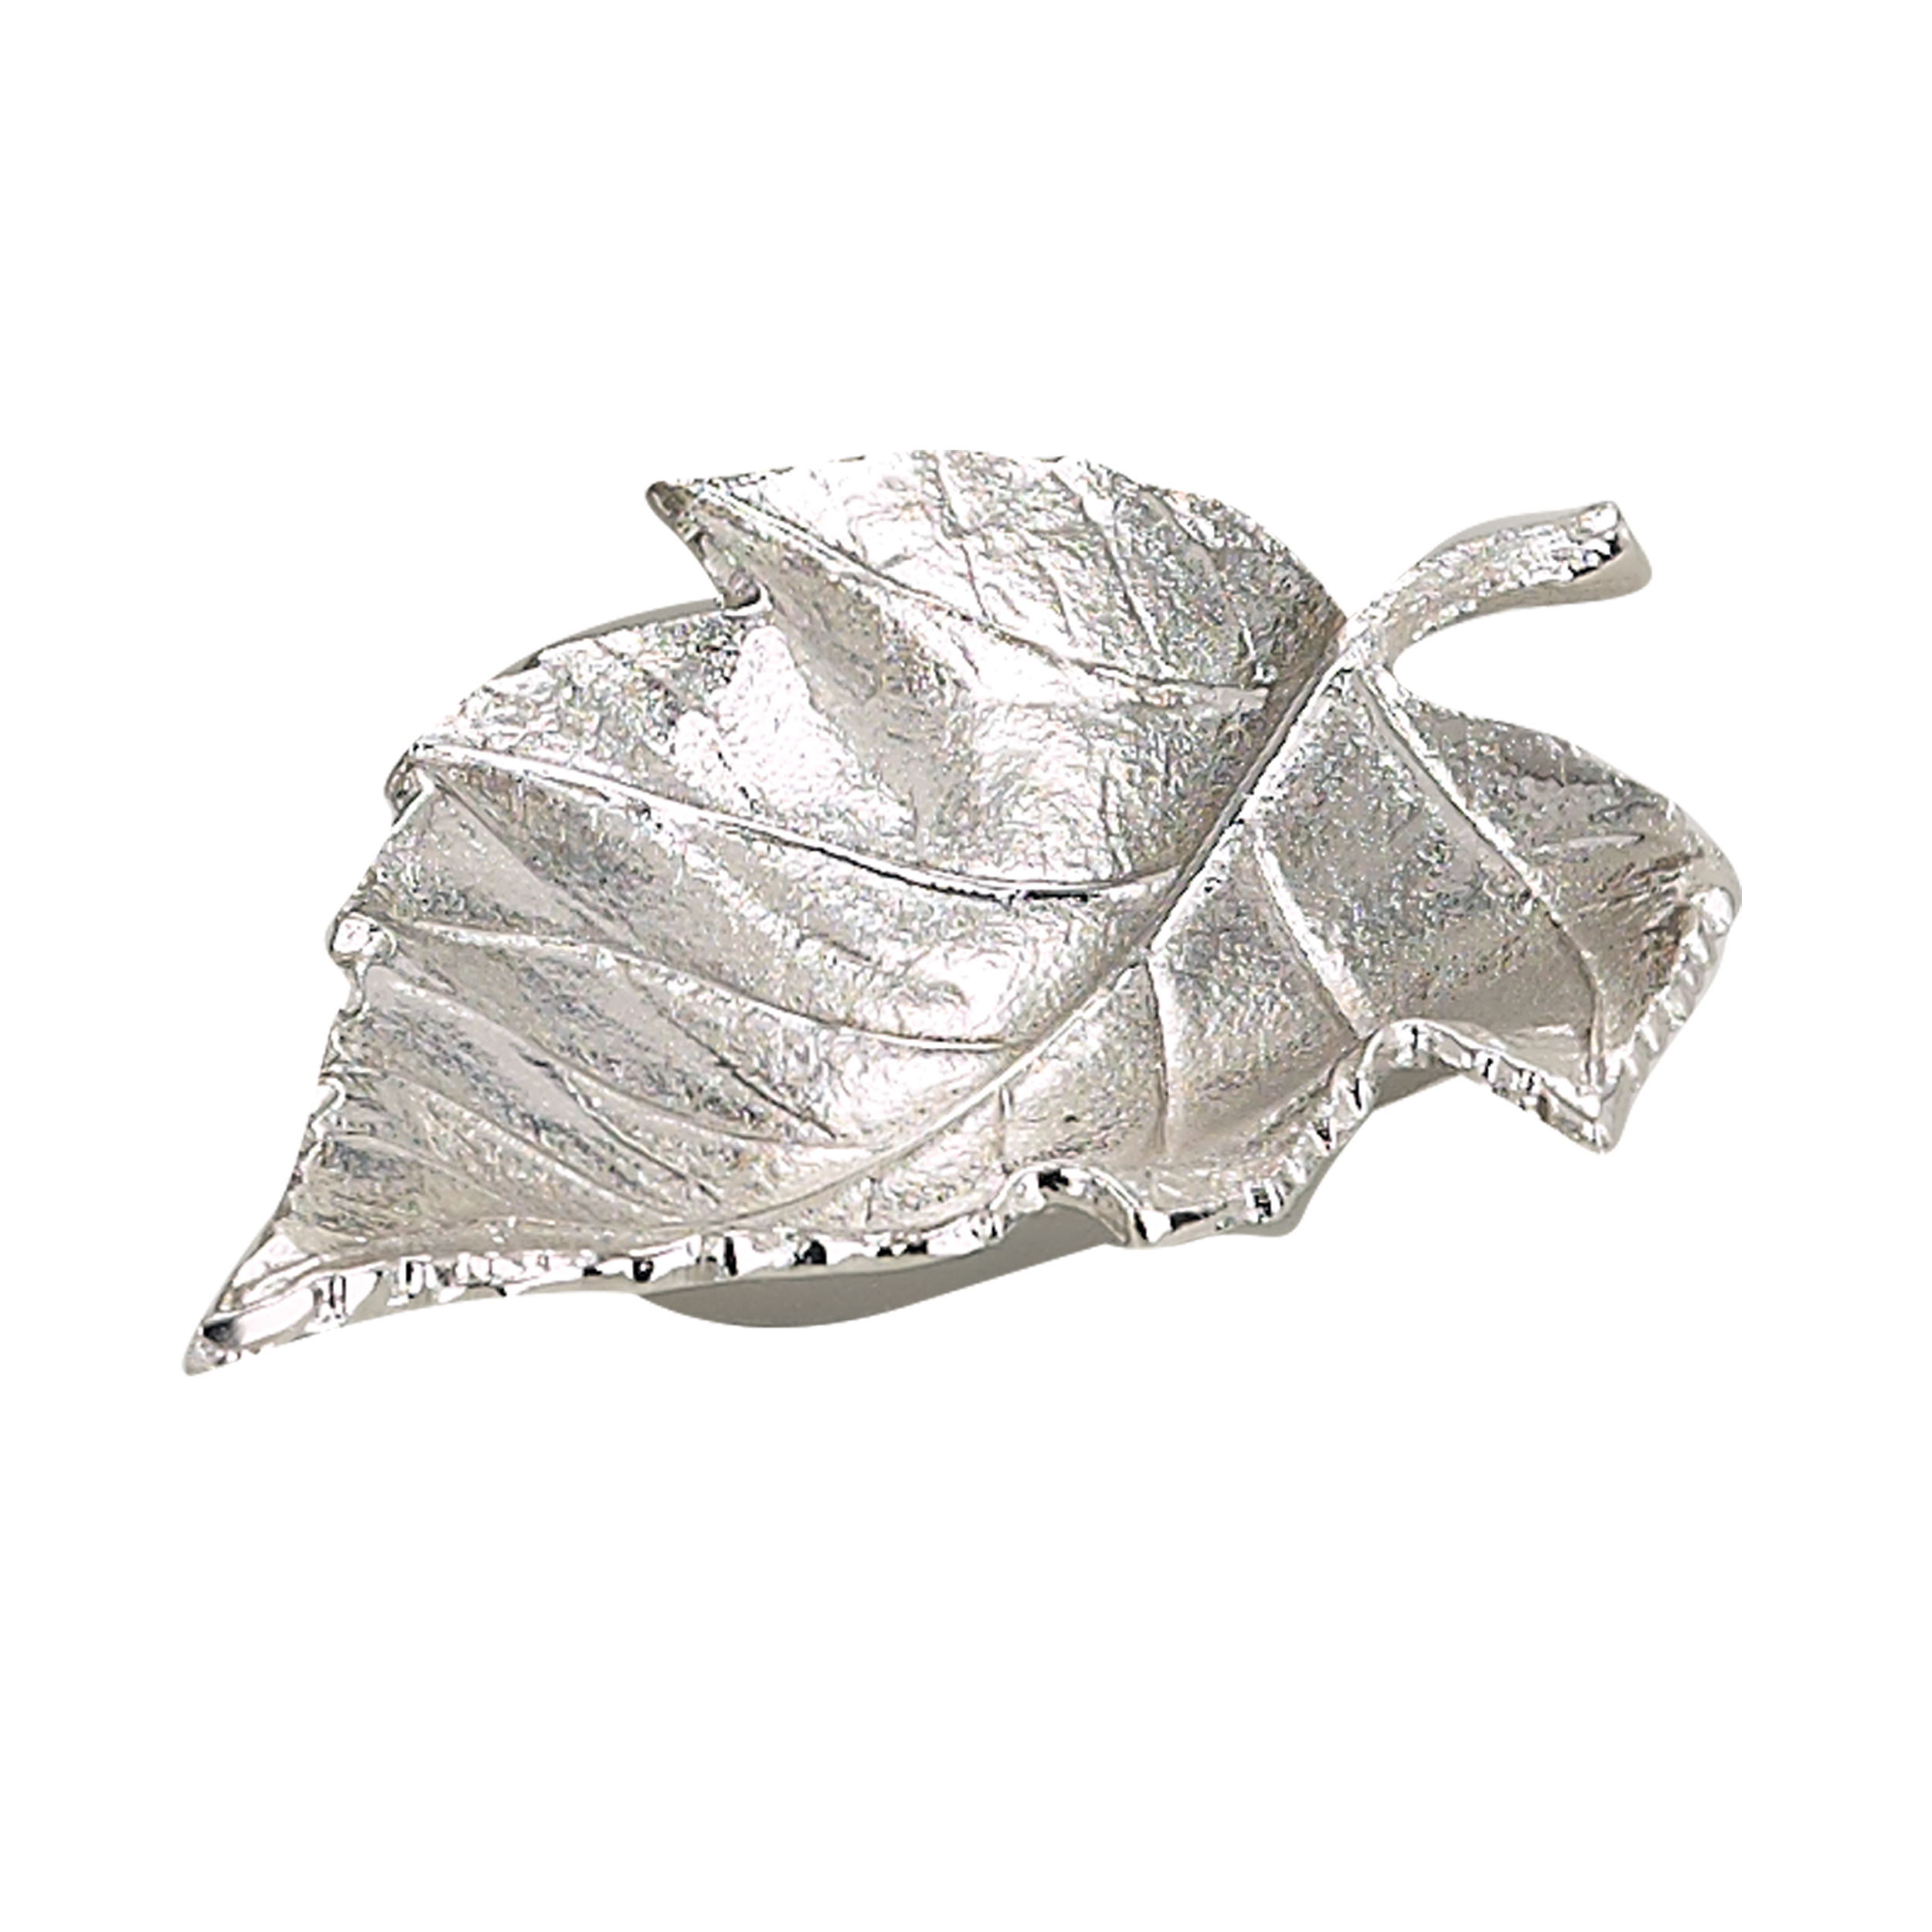 Maple leaf dish, med., 9"x7" - Item # 6340